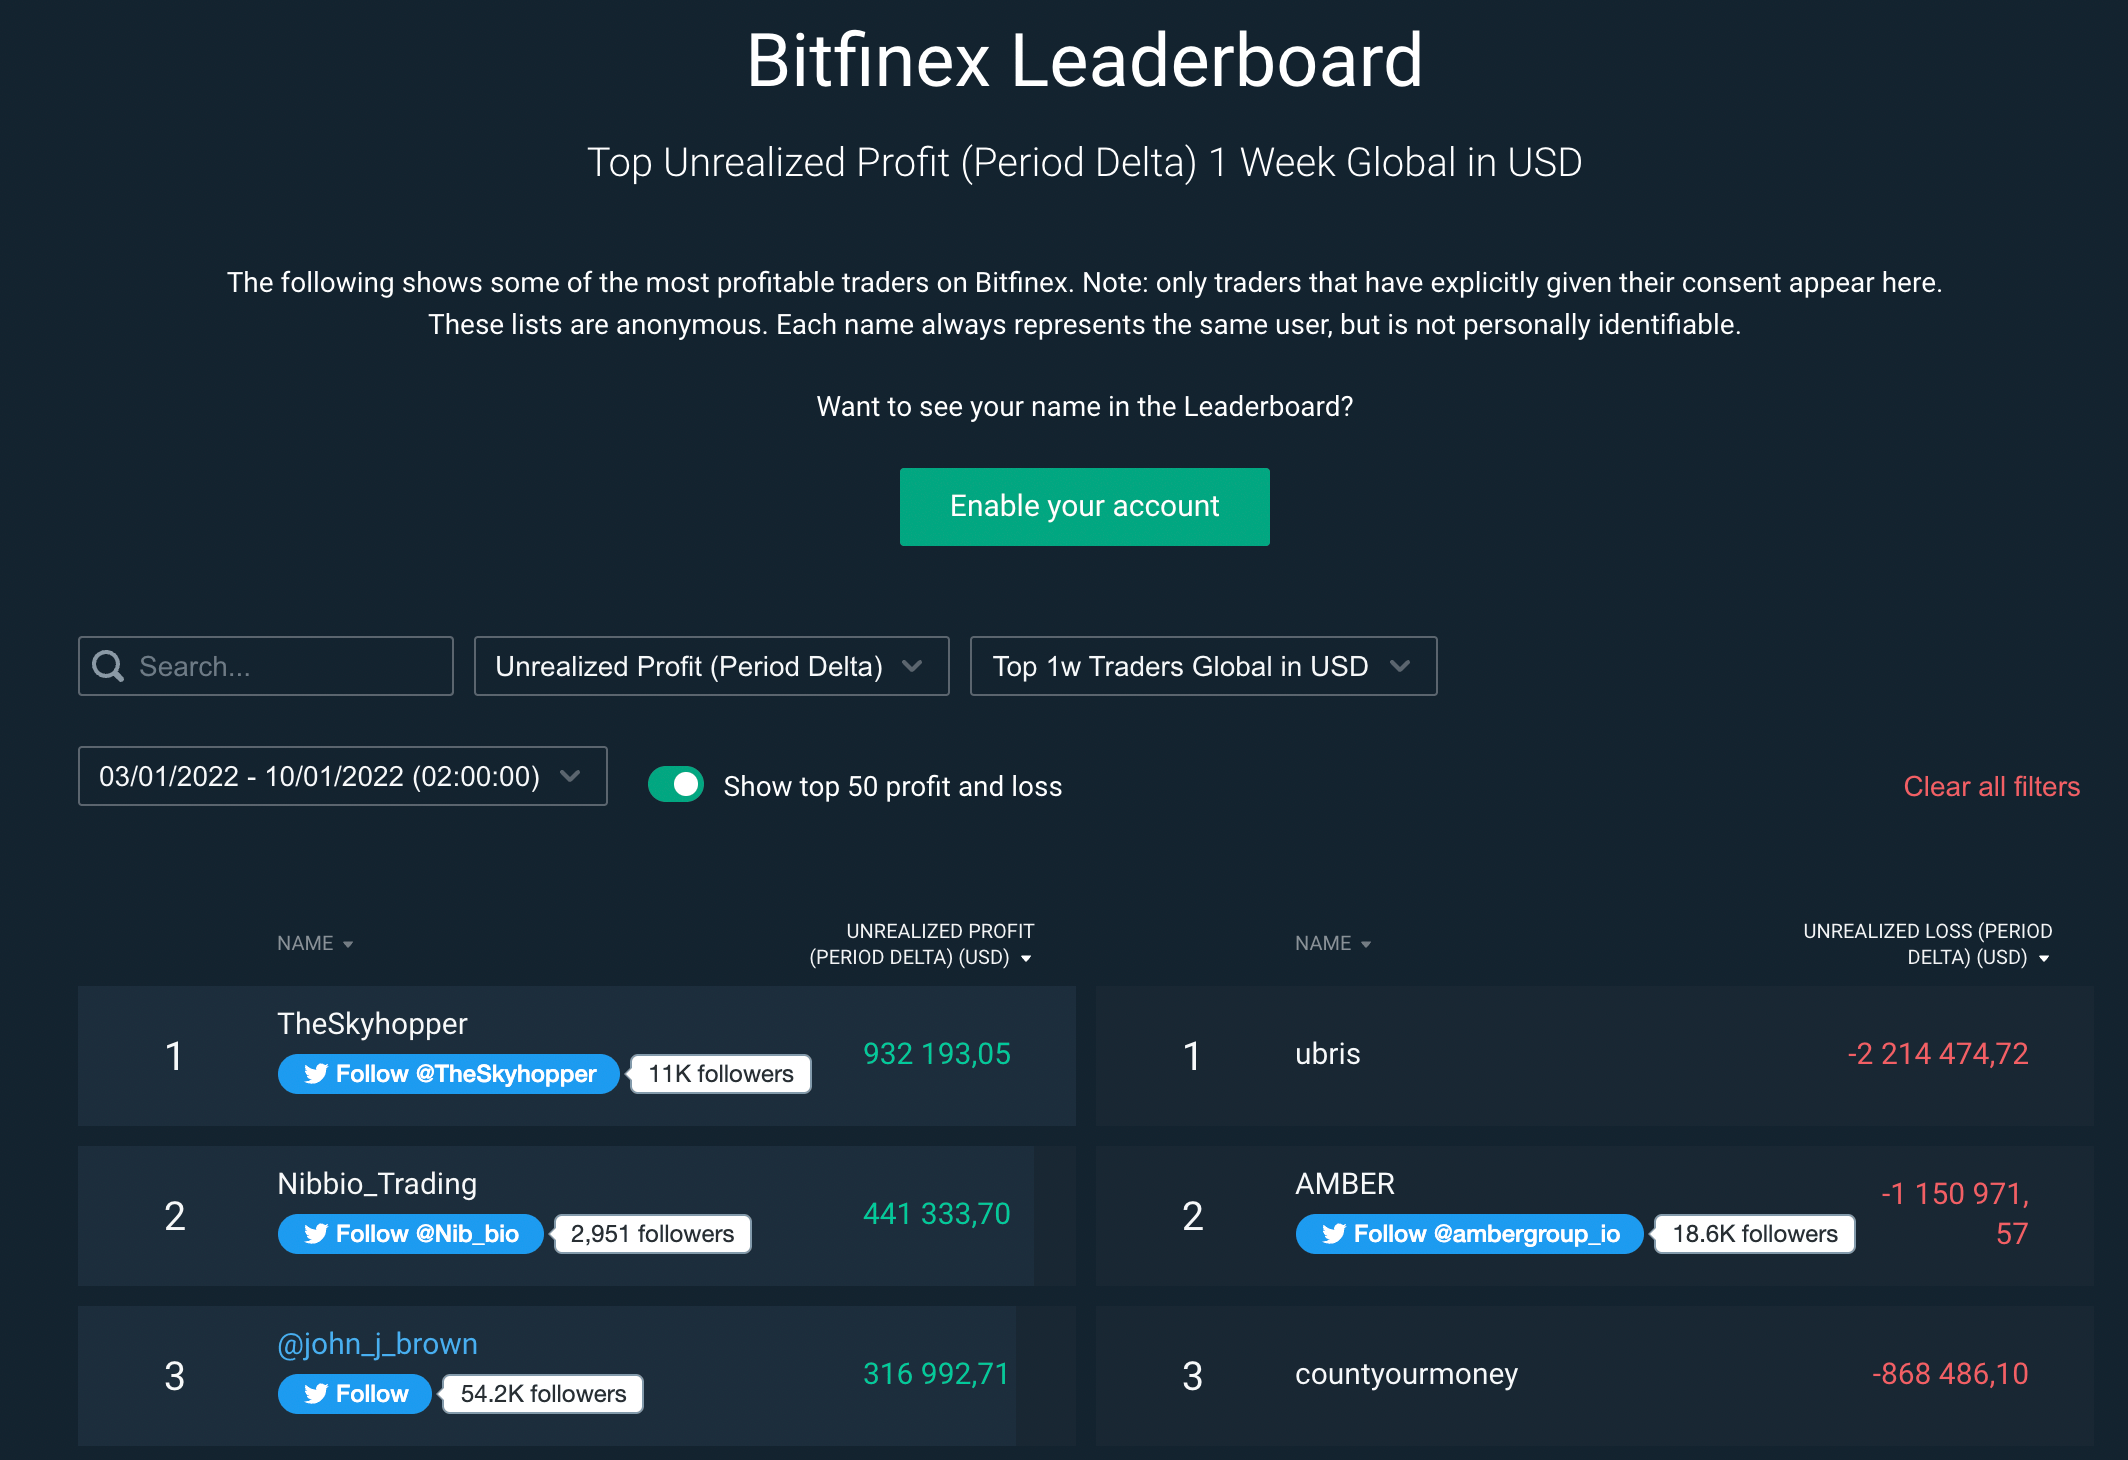 Rating of traders on Bitfinex